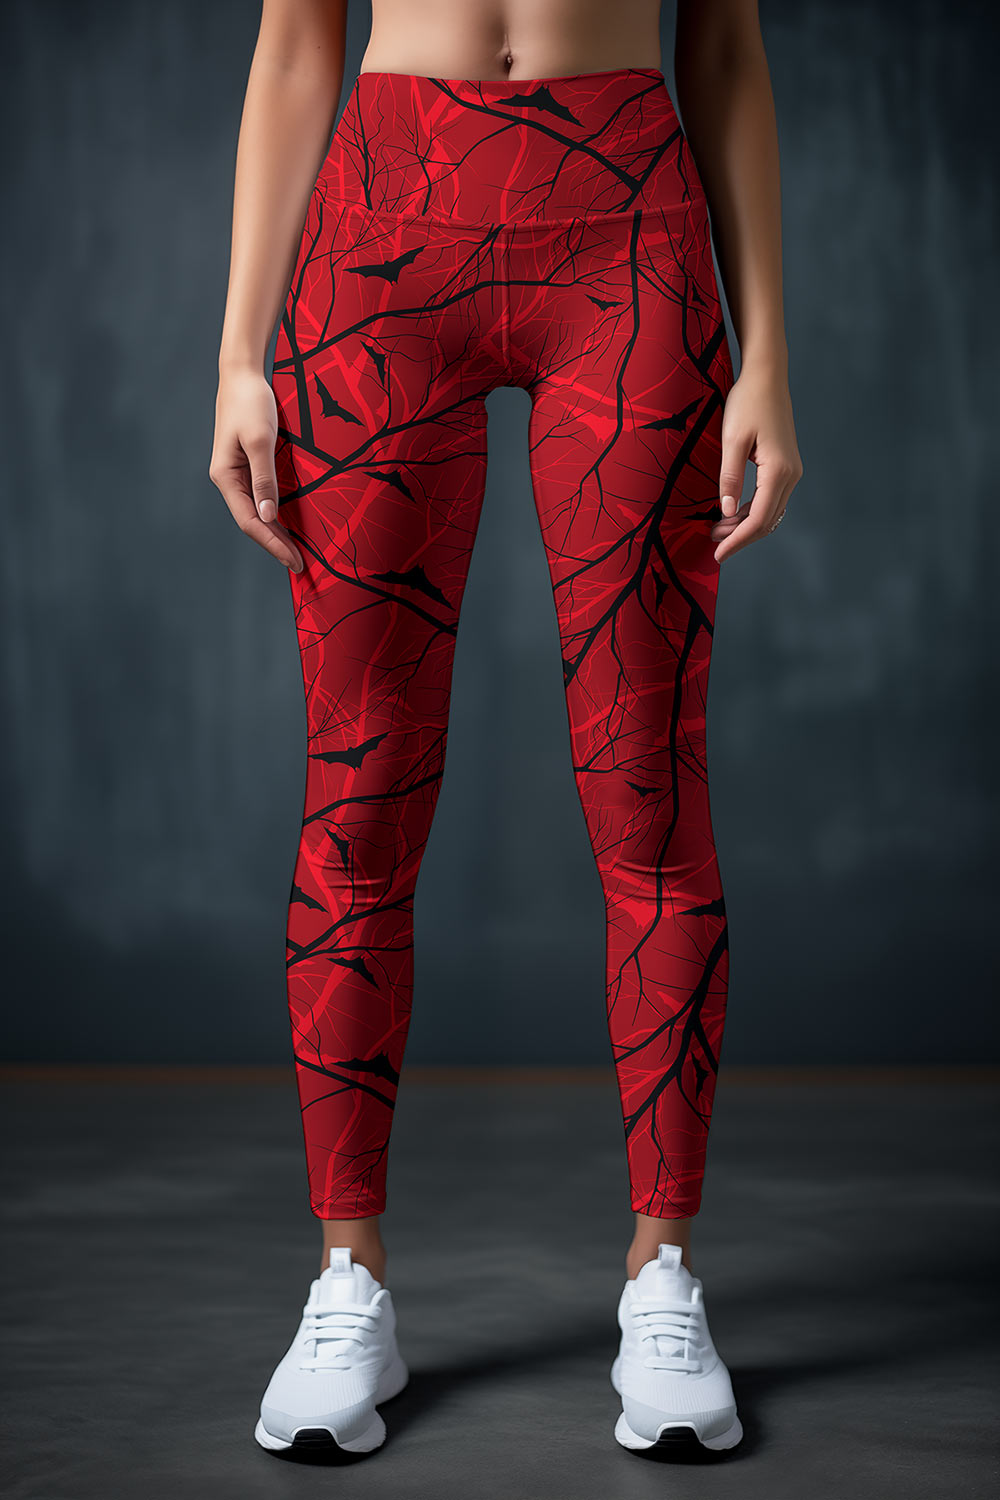 Image of Full Moon Lucy Red Fall Halloween Print Leggings Yoga Pants - Women